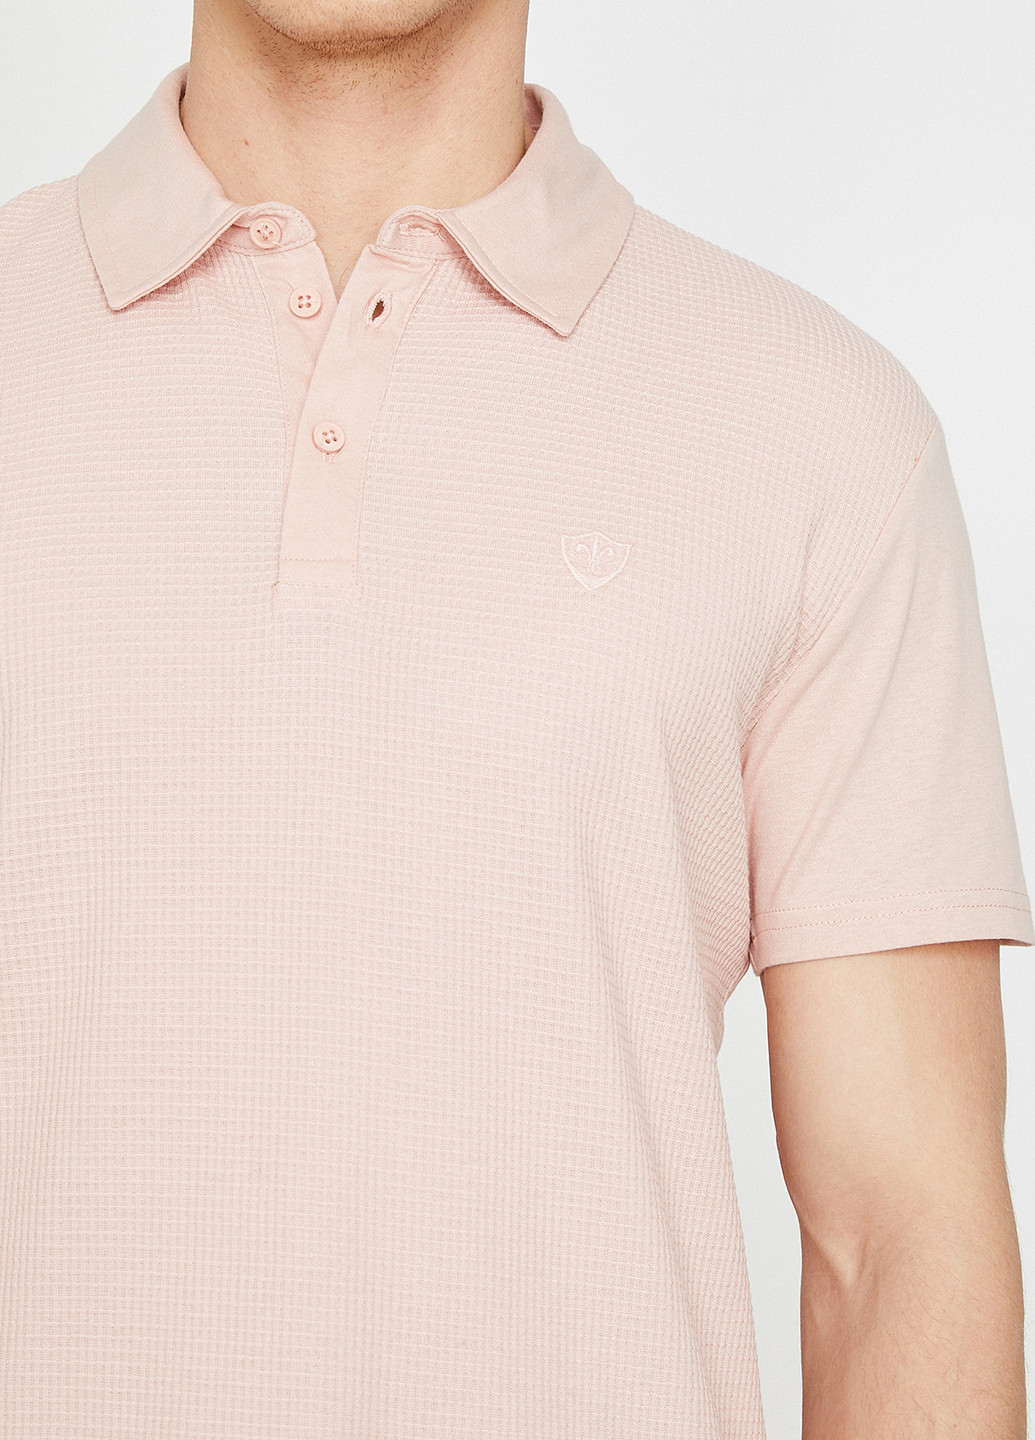 Светло-розовая футболка-поло для мужчин KOTON однотонная